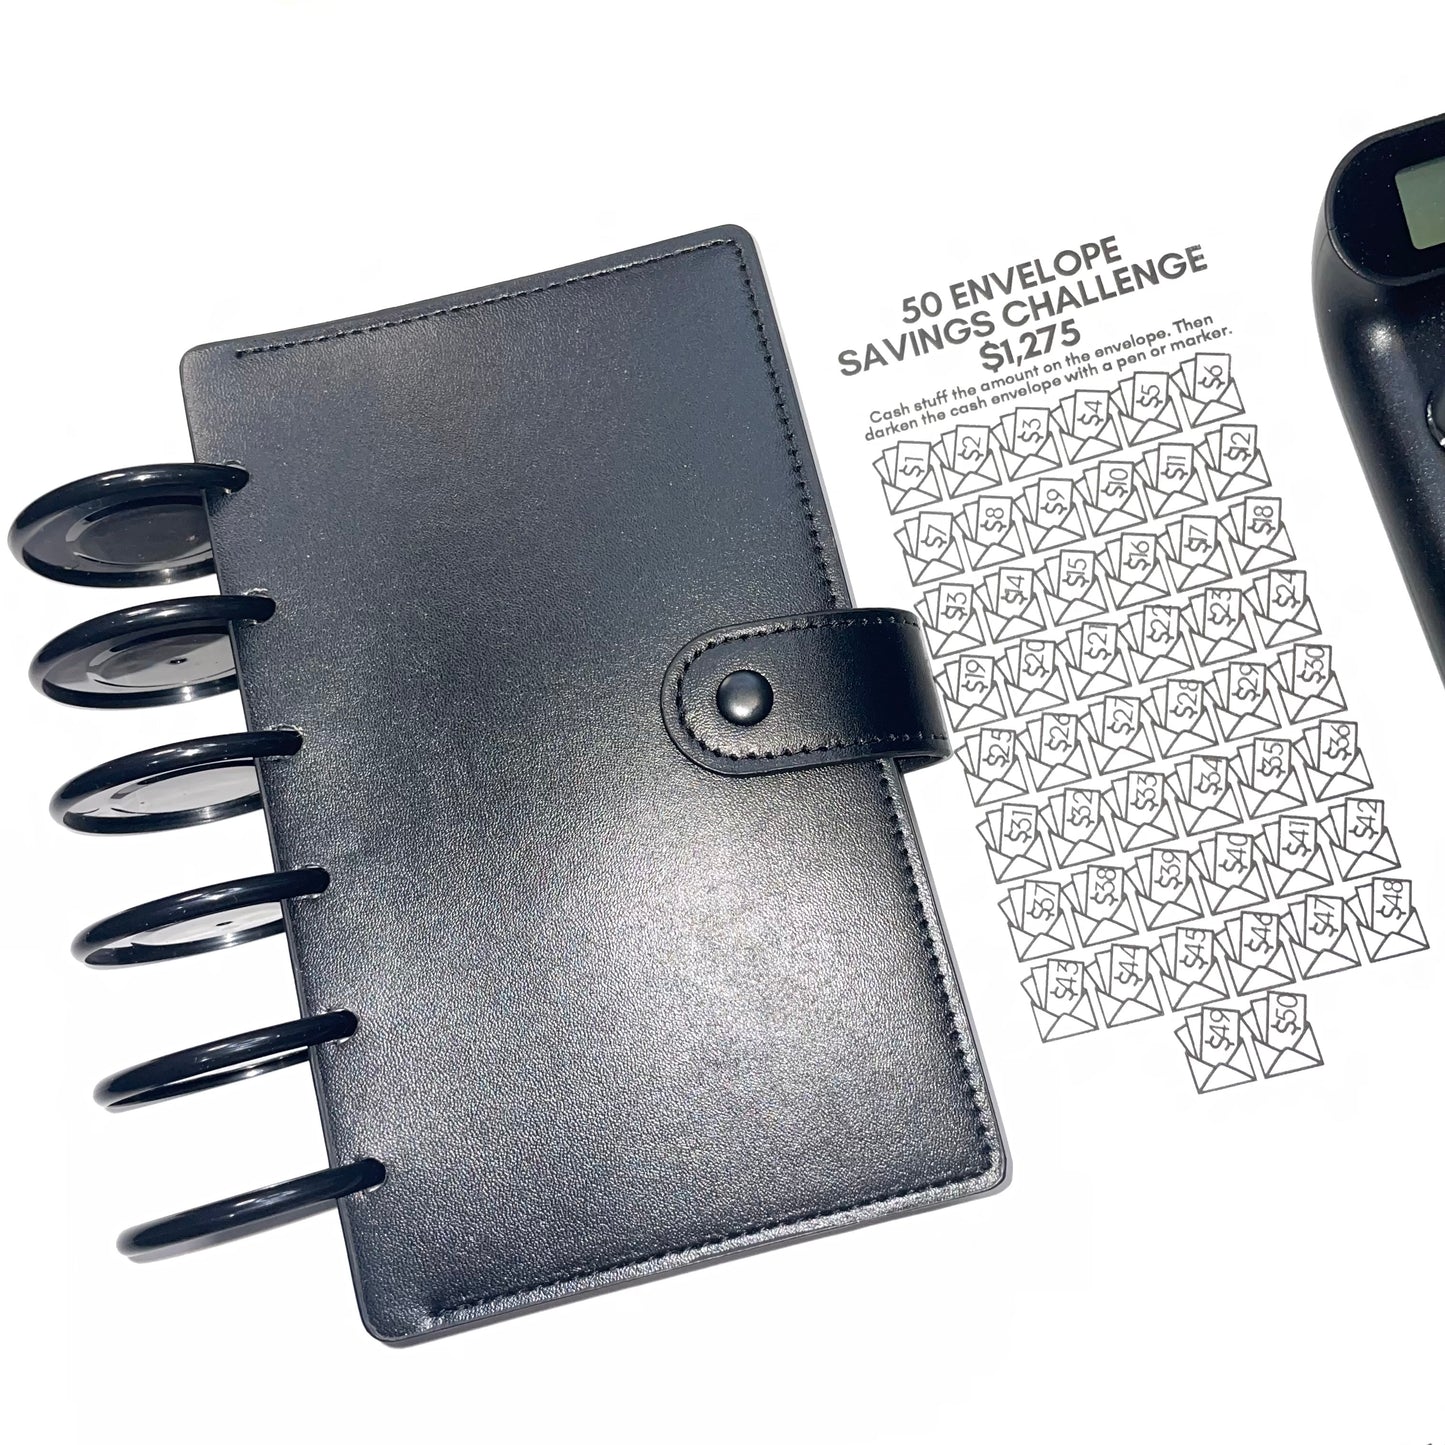 Budget System | 50 Cash Envelopes System | Organizer | Smooth Black Leather Discbound